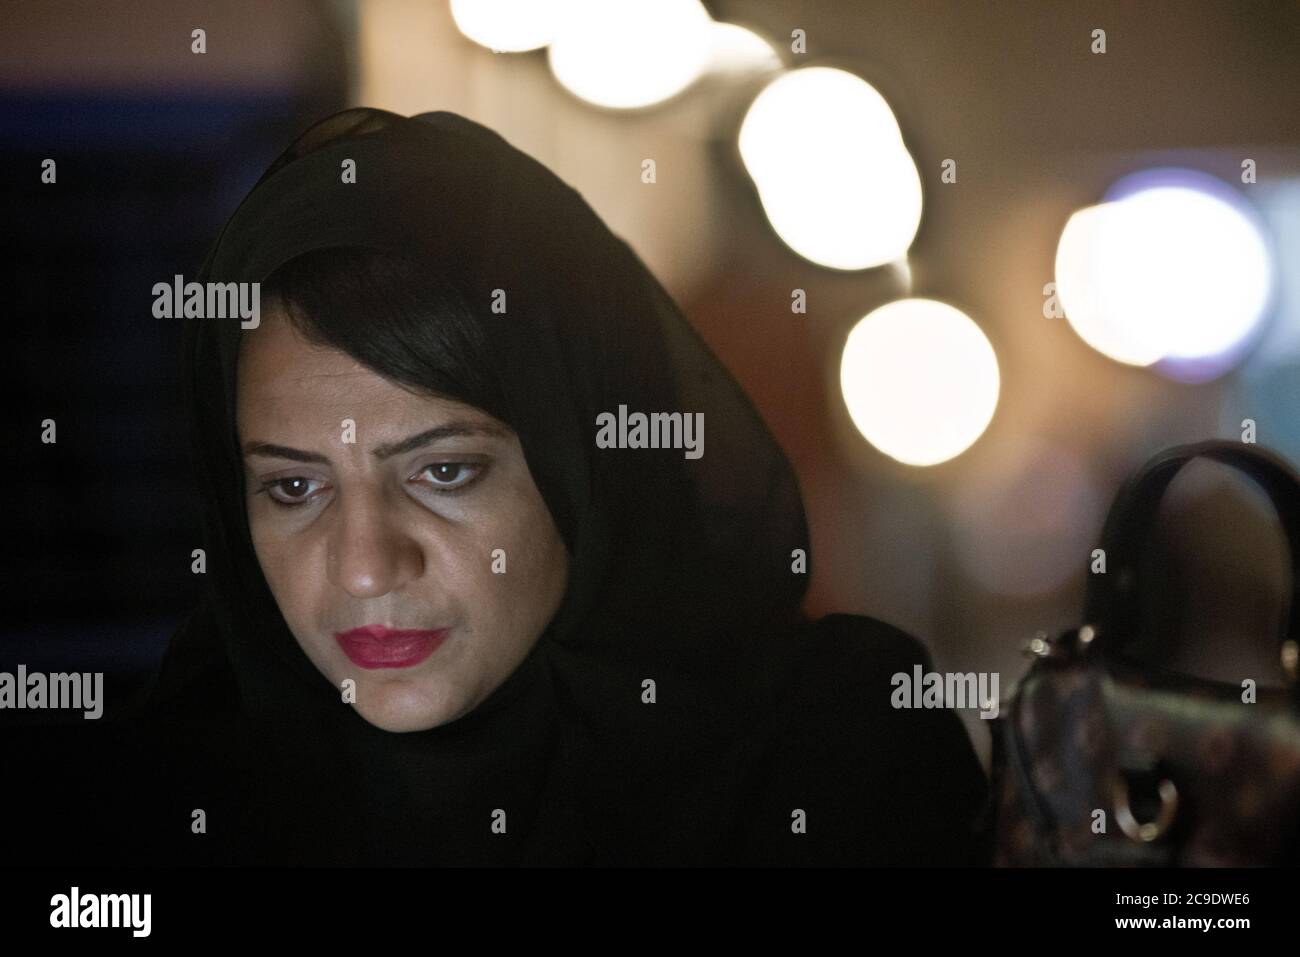 Muslim woman wearing black hijab. Souq Waqif, Doha, Qatar Stock Photo